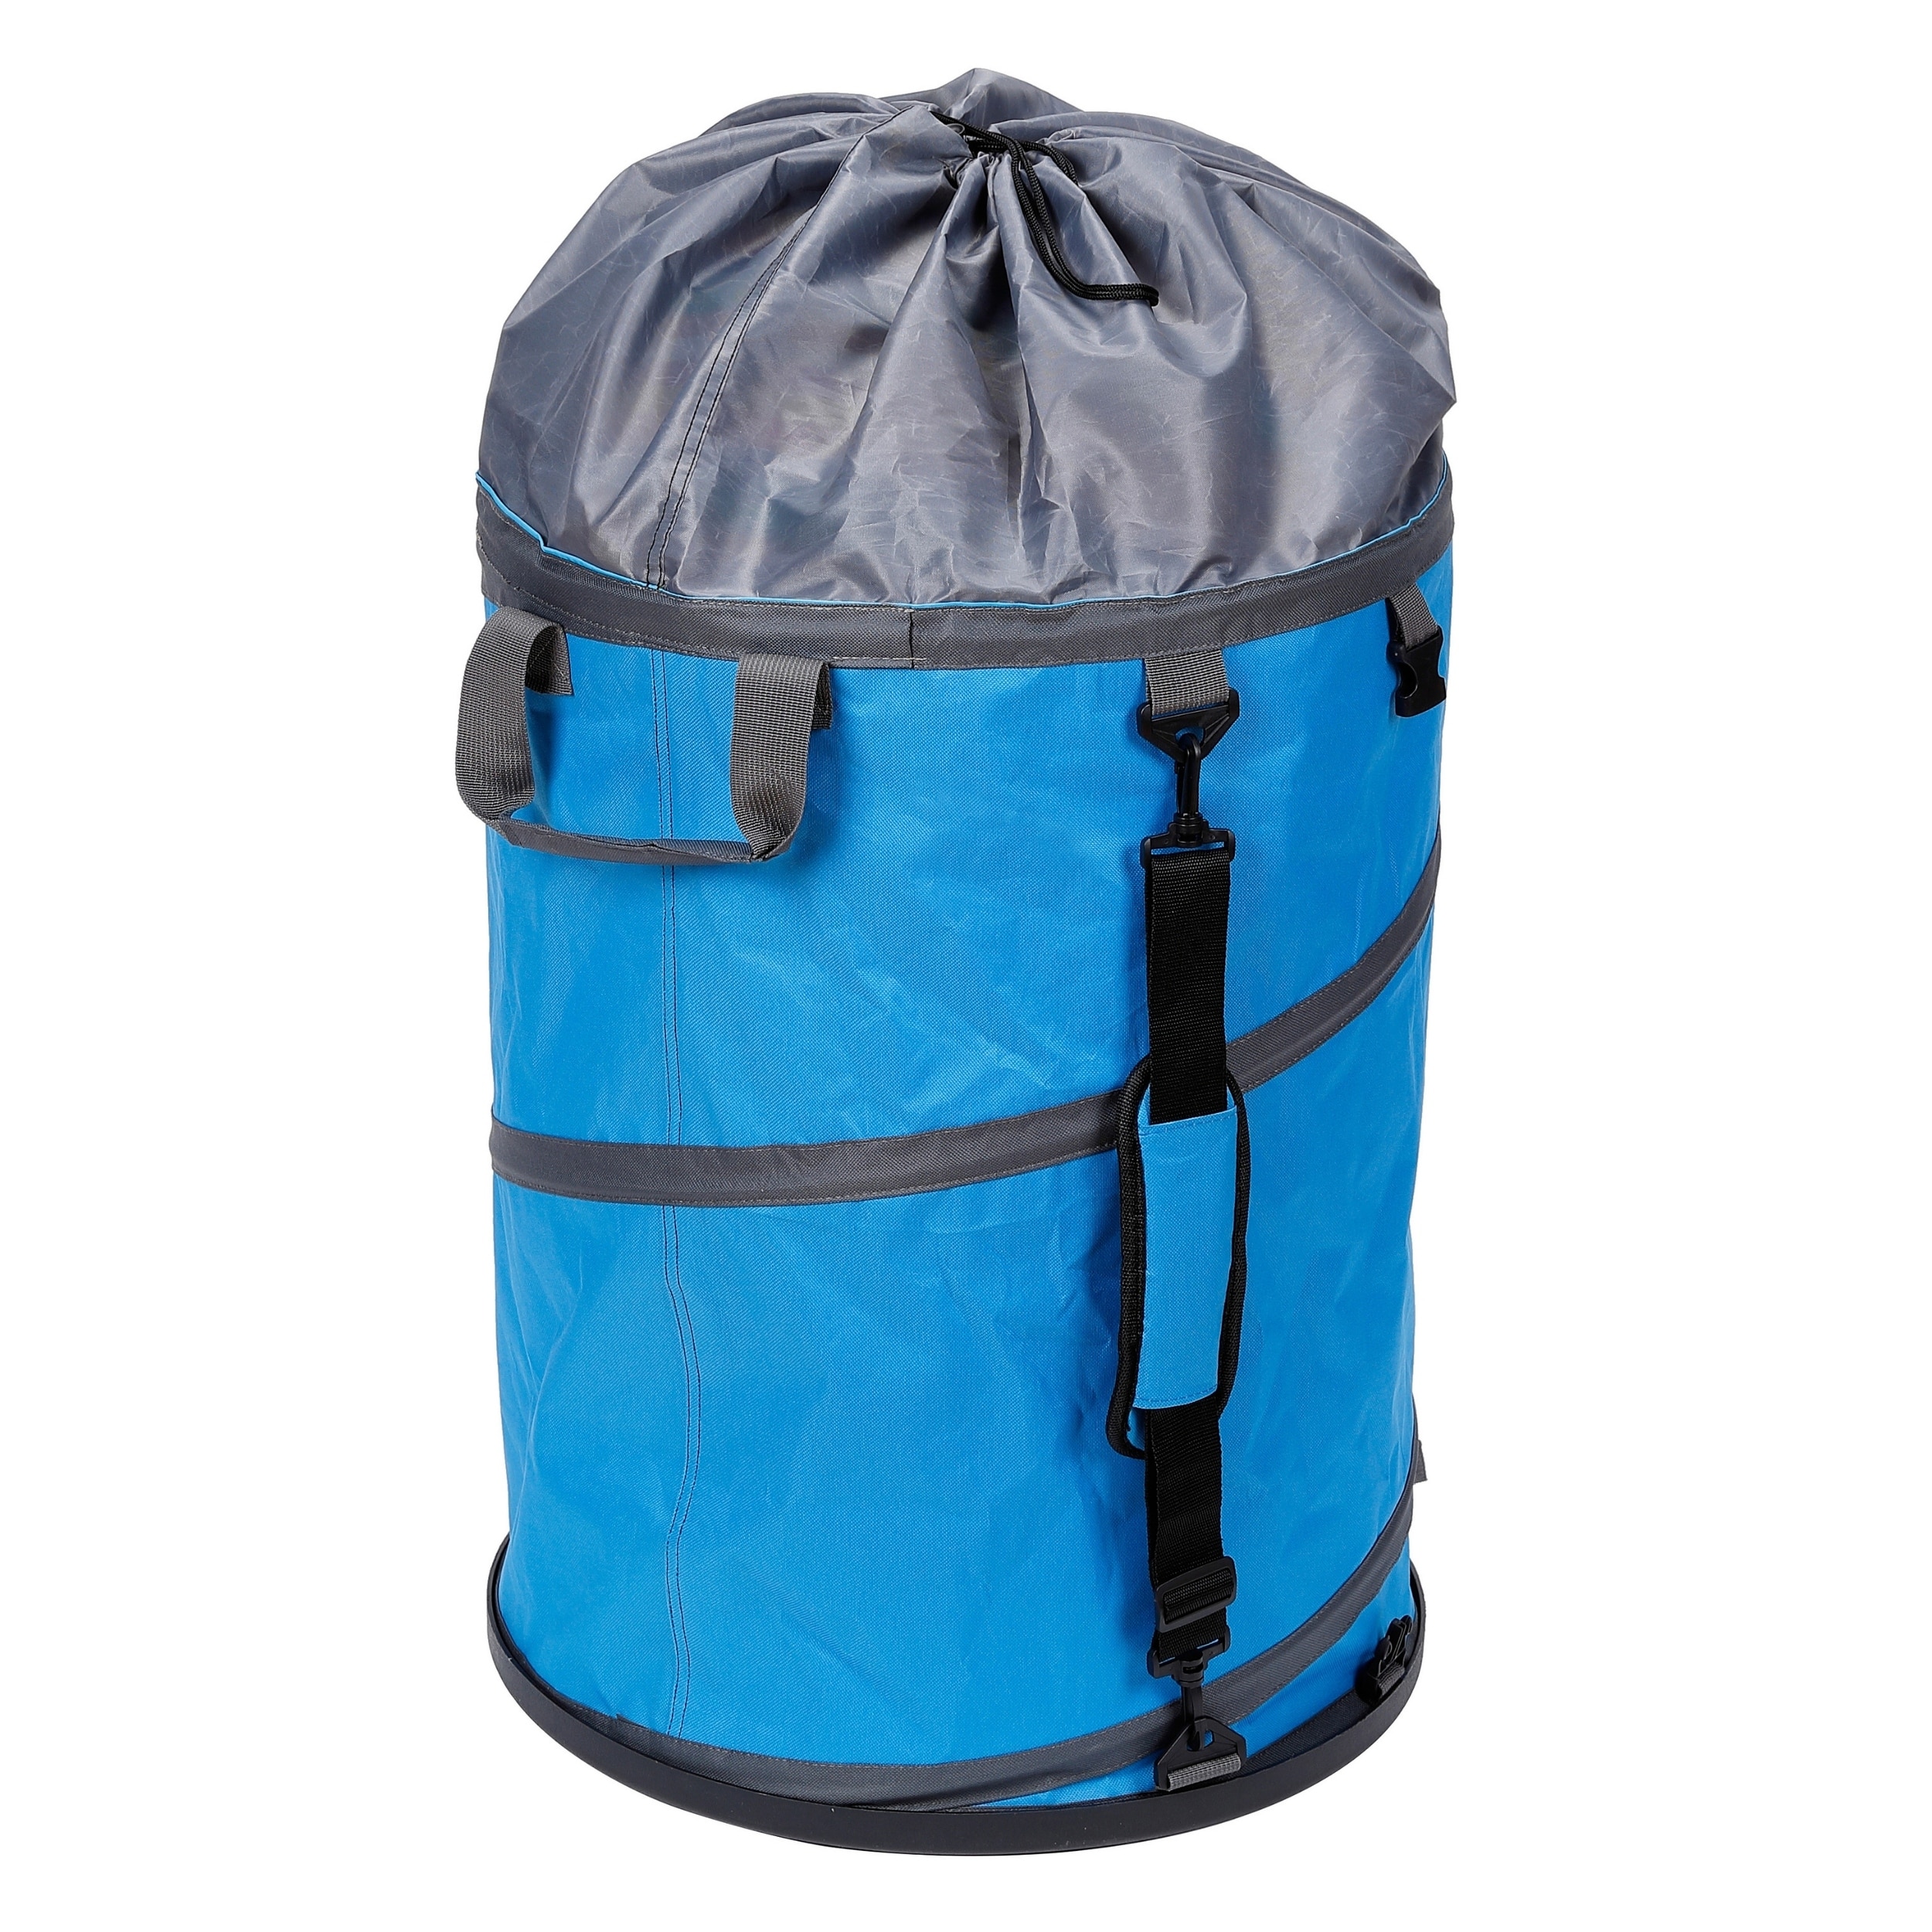 Portable Pop Up Camp Trash Can 30 Gal Collapsible Garbage Bin Reusable Leaf Bag 